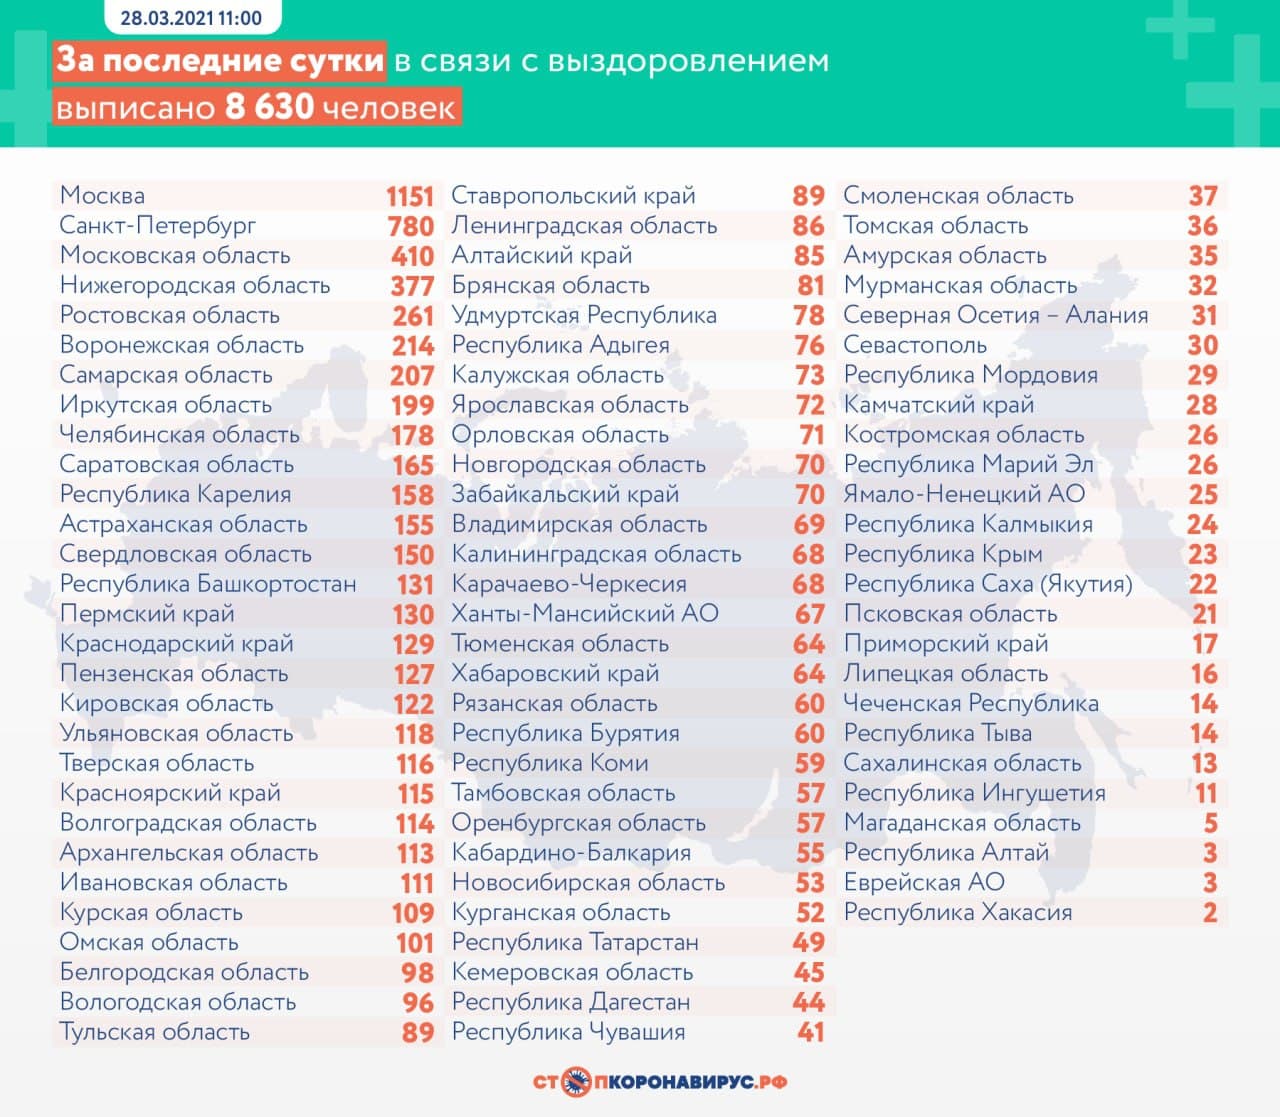 Оперативная статистика по коронавирусу в России на 28 марта